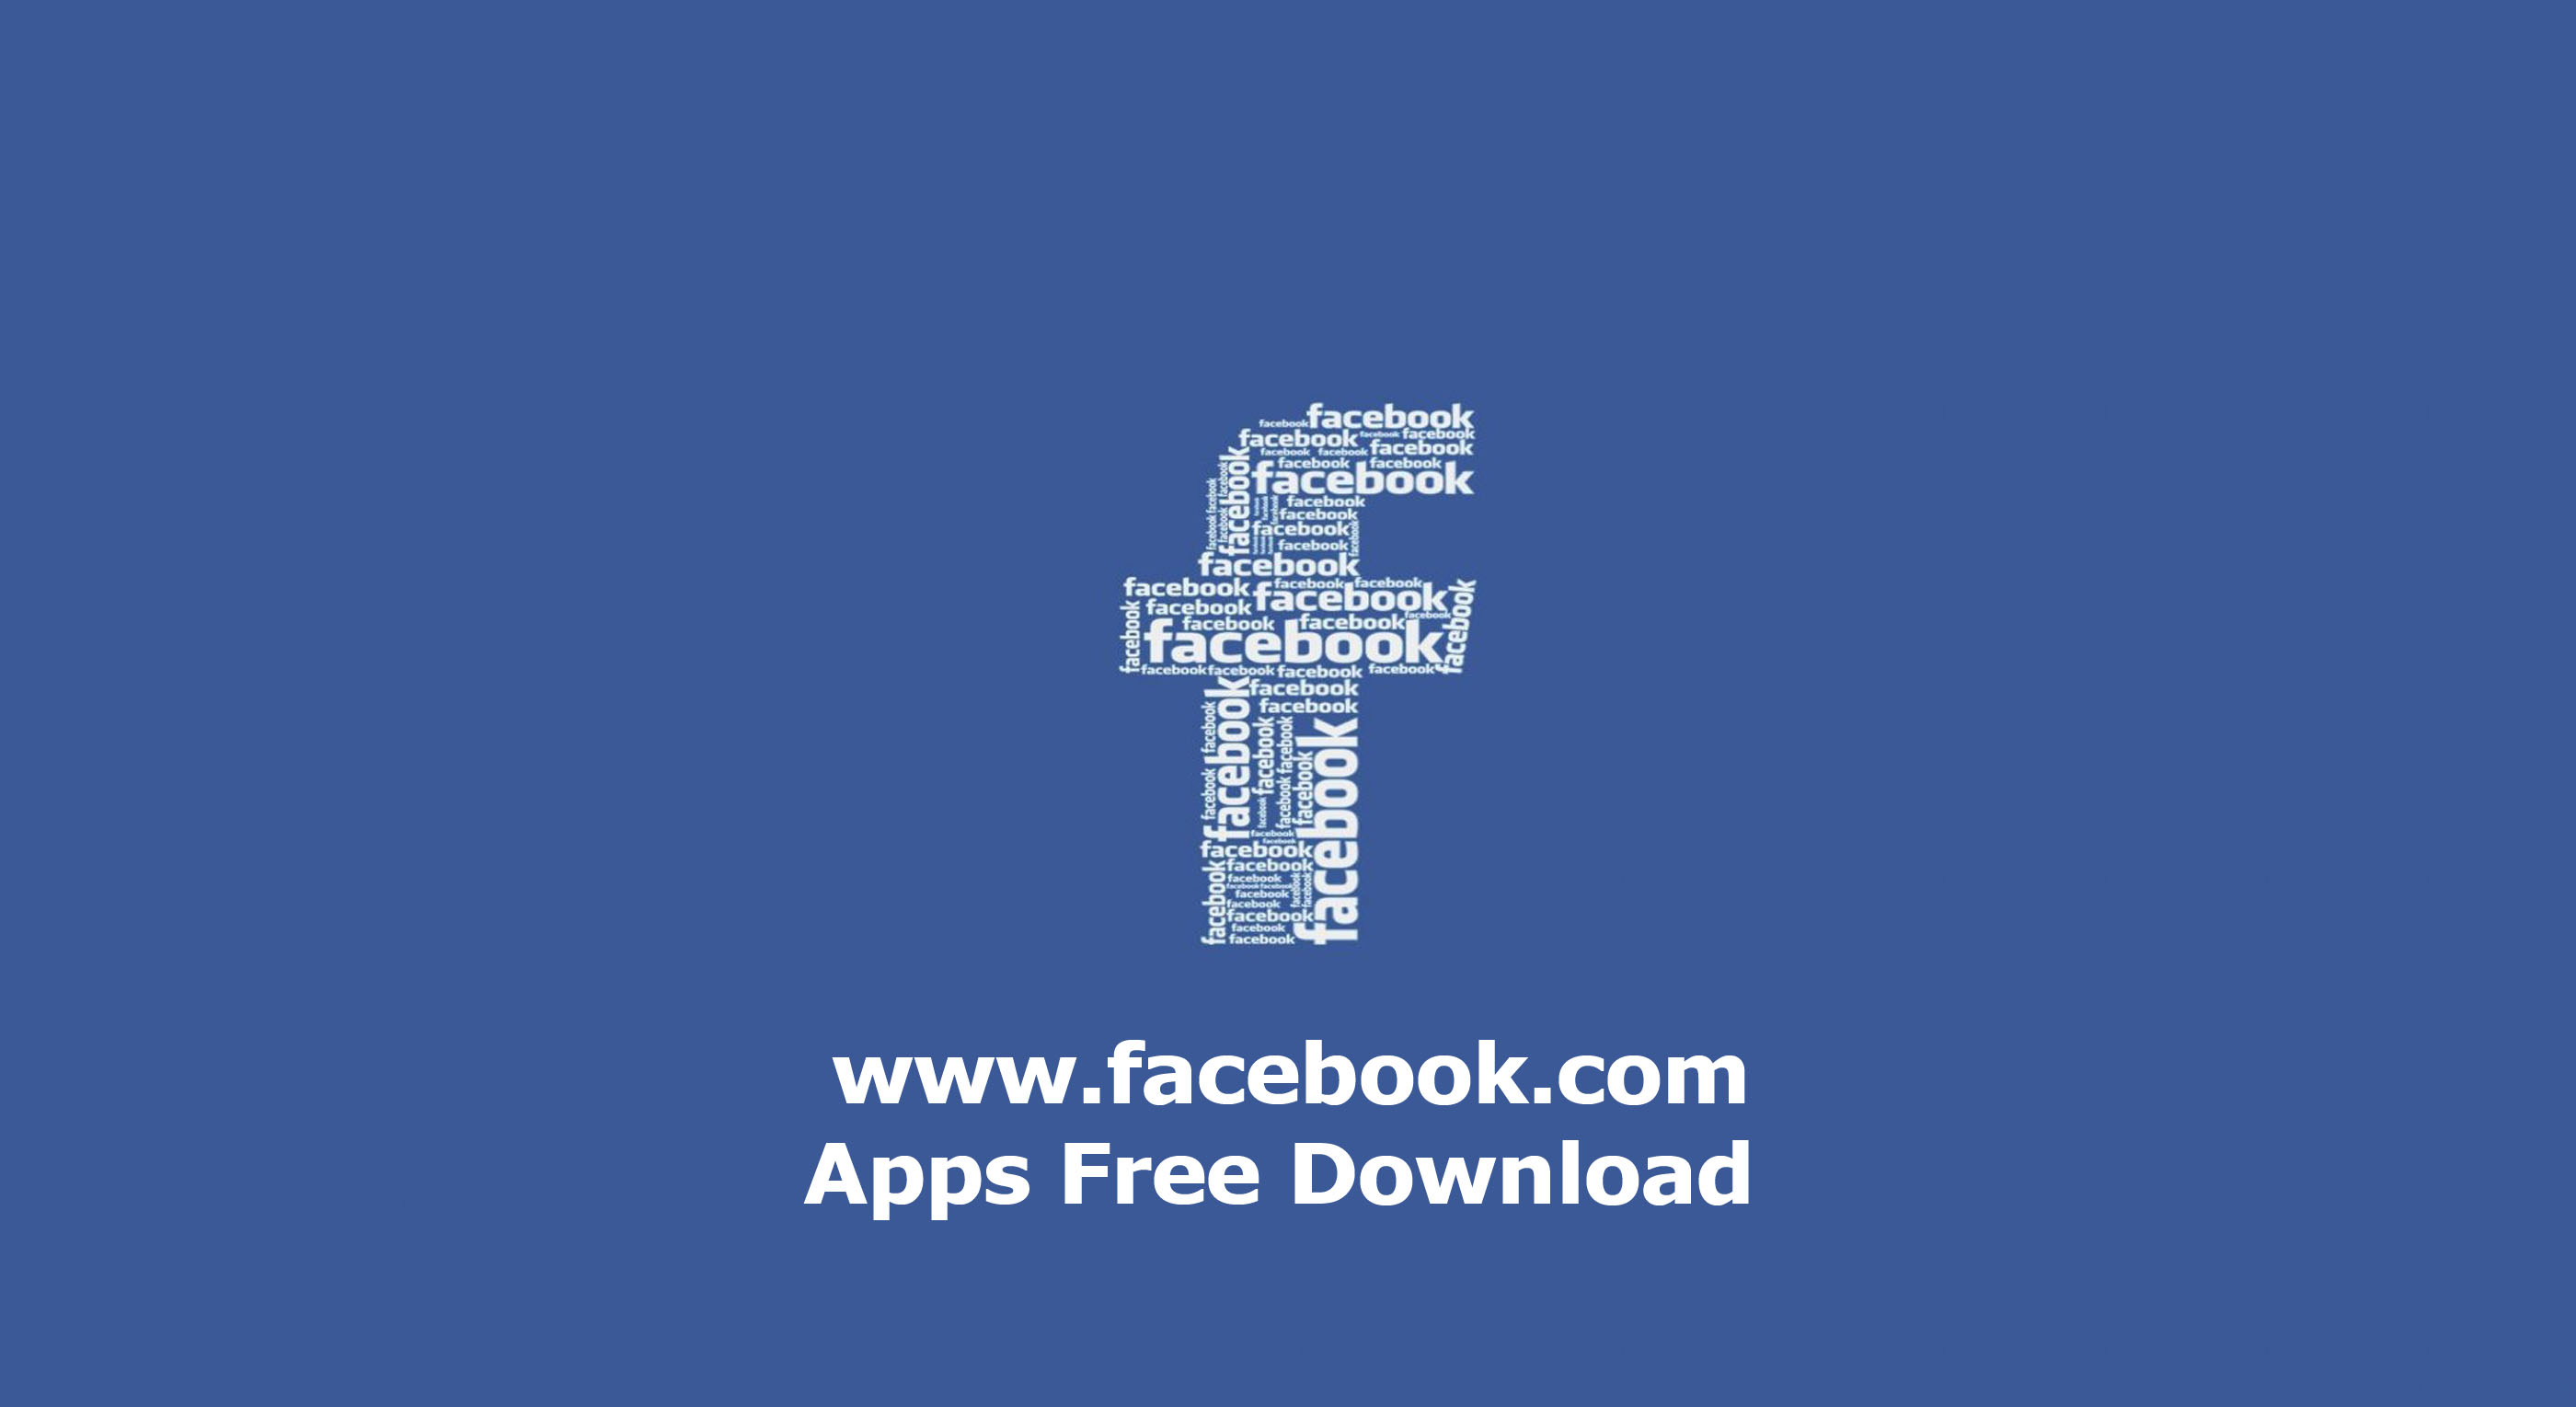 www.facebook.com Apps Free Download - Download Facebook Apps For Free